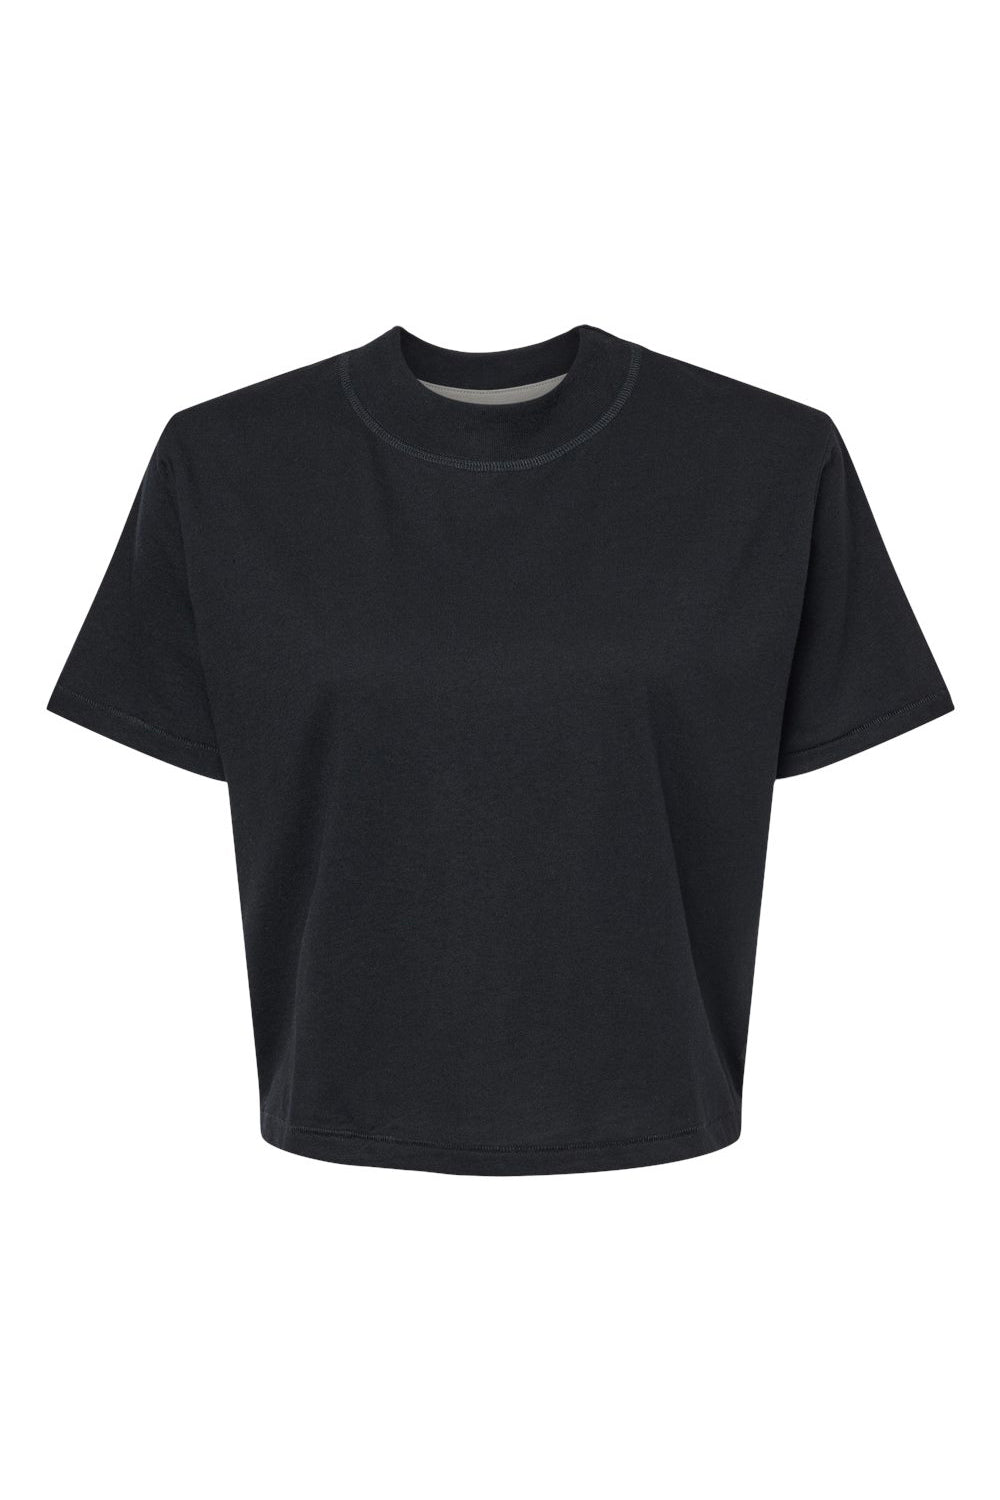 LAT 3518 Womens Boxy Short Sleeve Crewneck T-Shirt Blended Black Flat Front